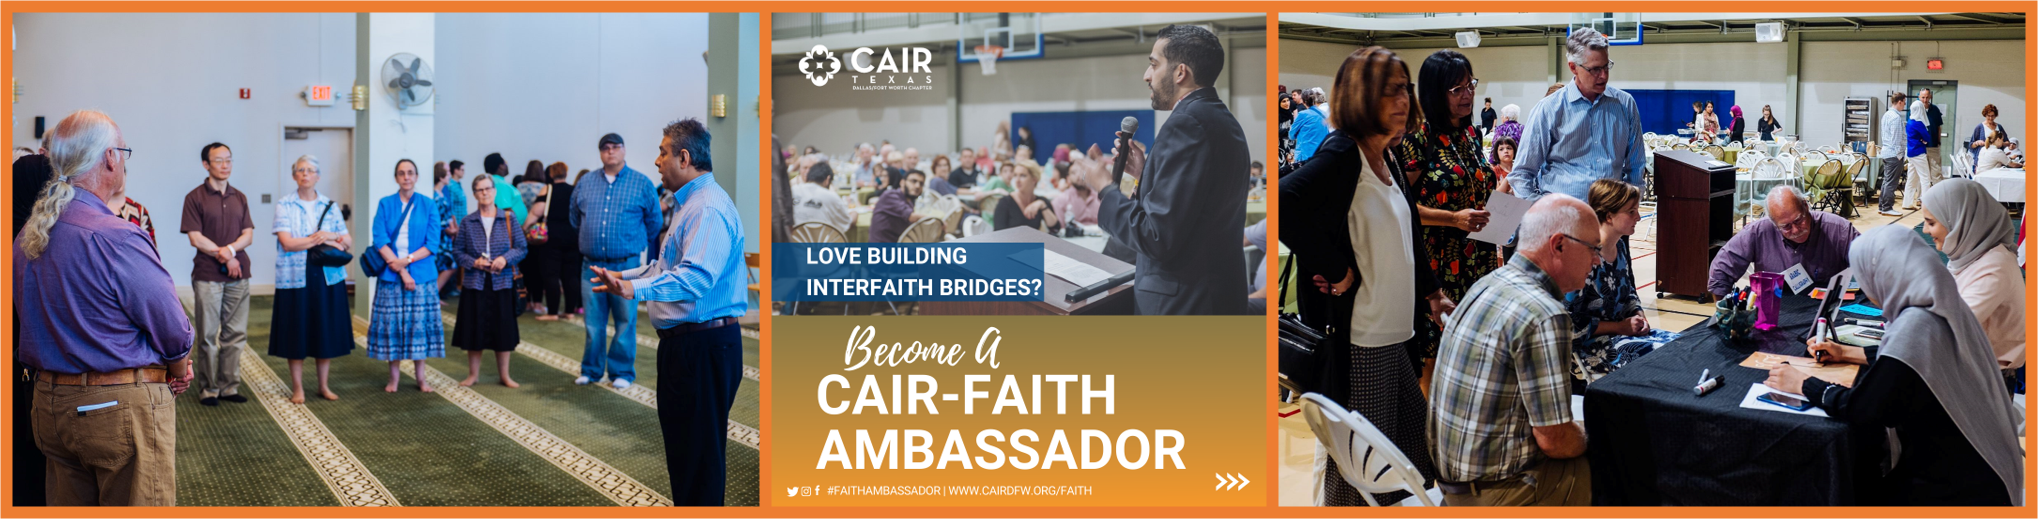 CAIR-Texas Faith Ambassador Program - Build Bridges of Mutual Understanding